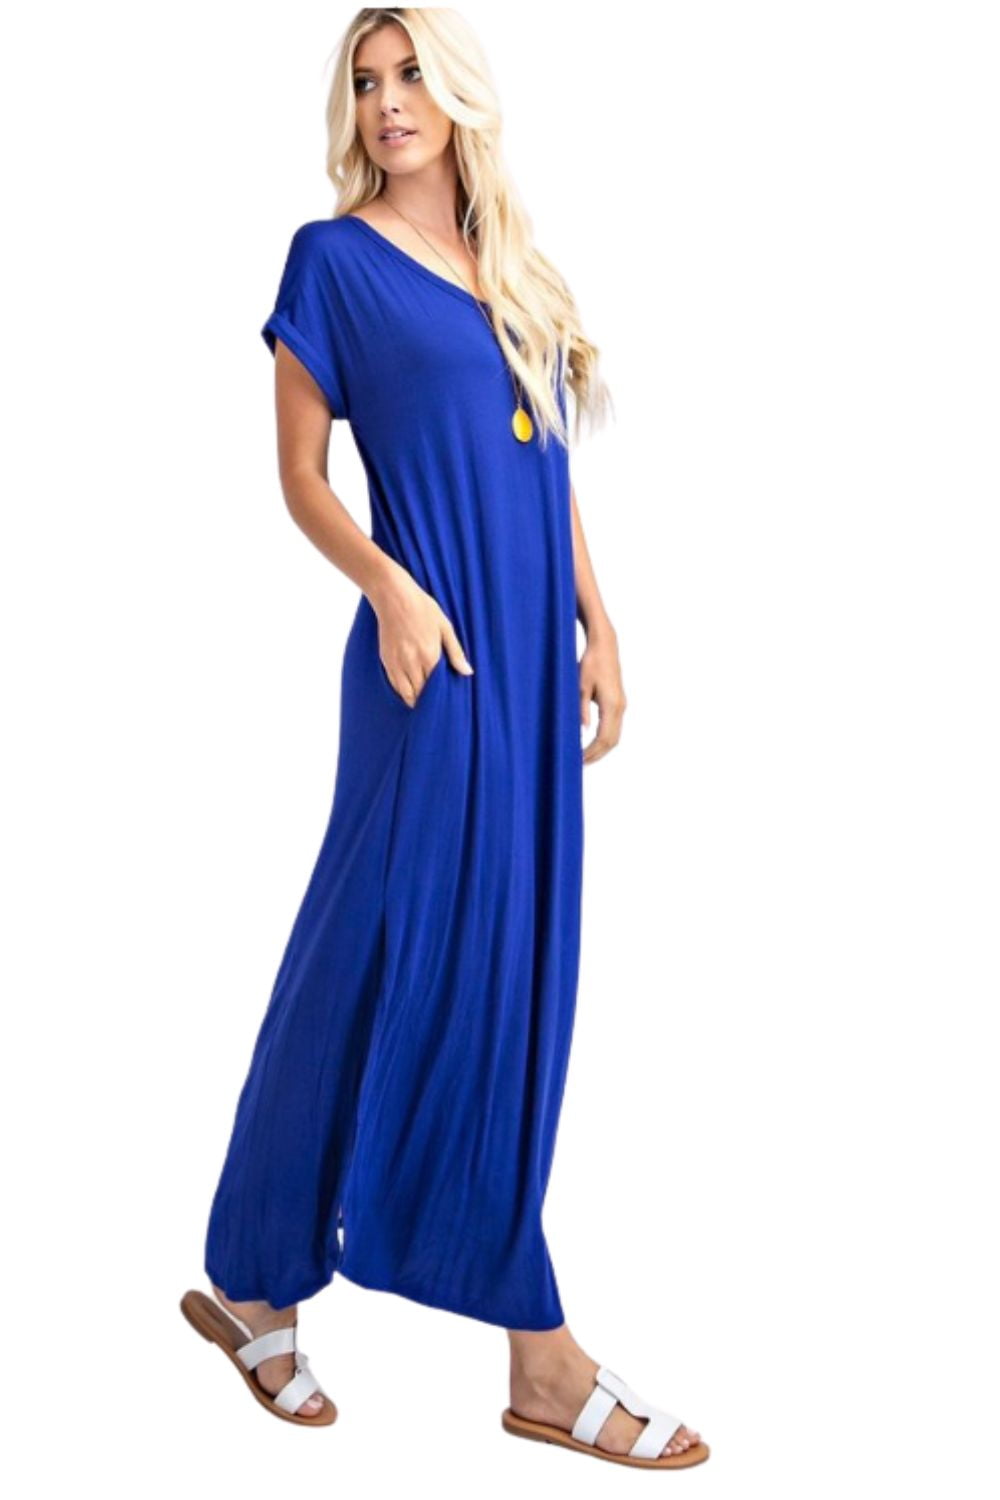 Rae Mode Womens V-Neck Slit Side With Pockets Maxi Dress (Large